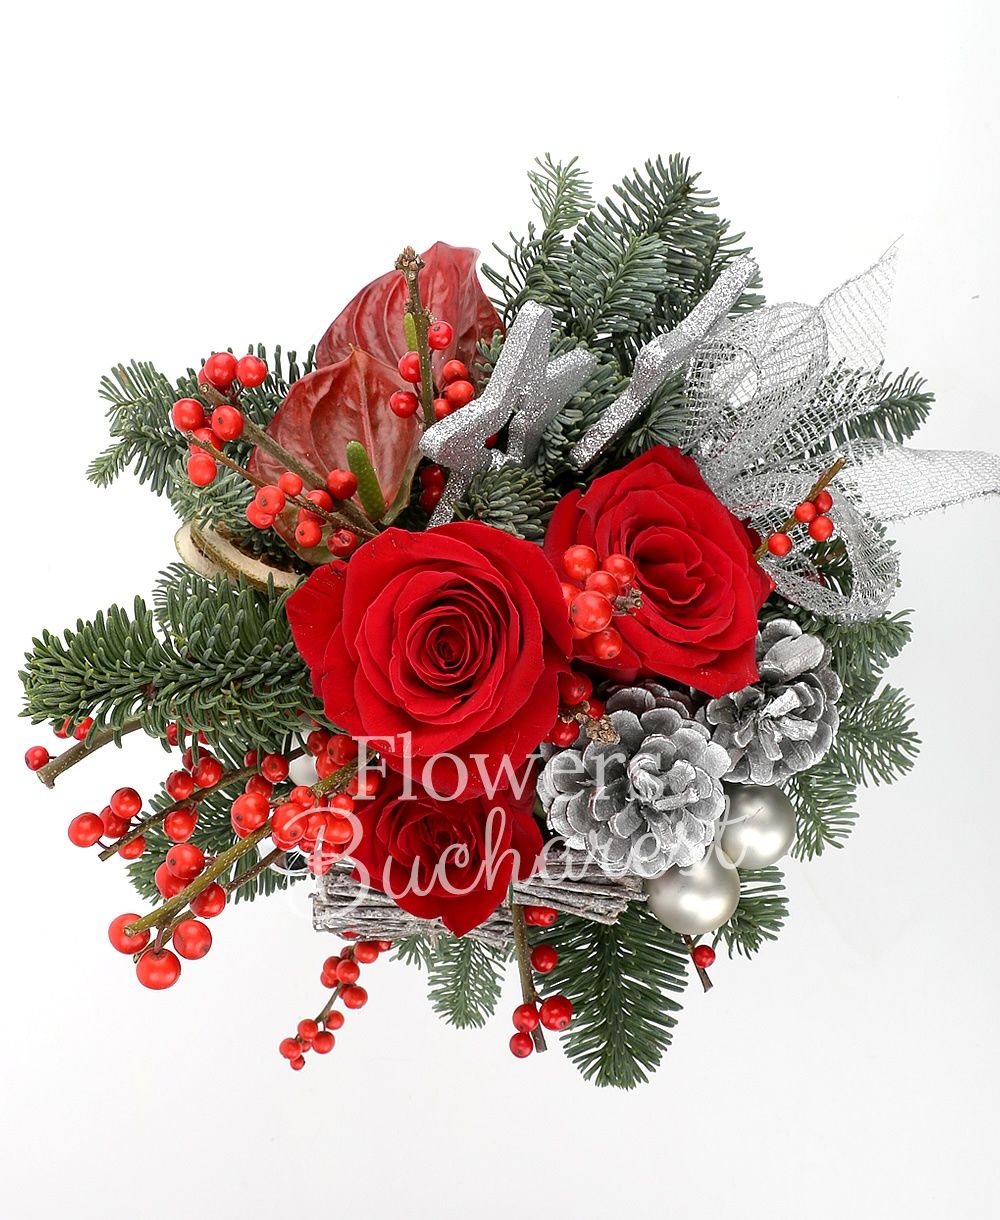 3 red roses, 2 red anthurium, globes, stars, sliced lemon slices, fir tree, greenery